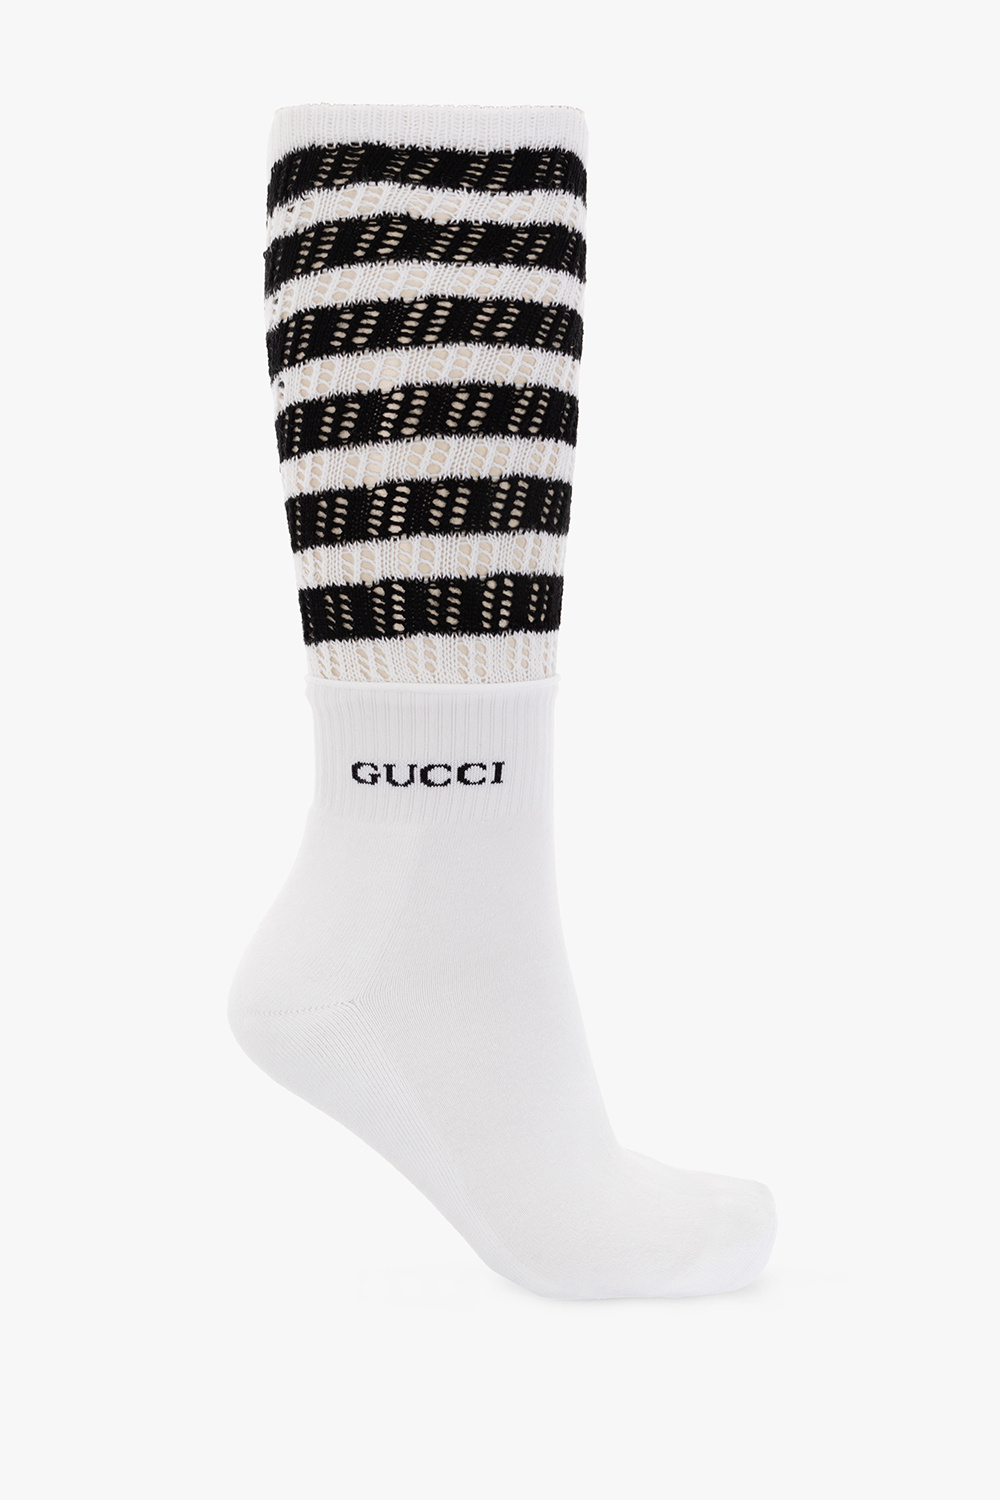 Gucci Openwork socks